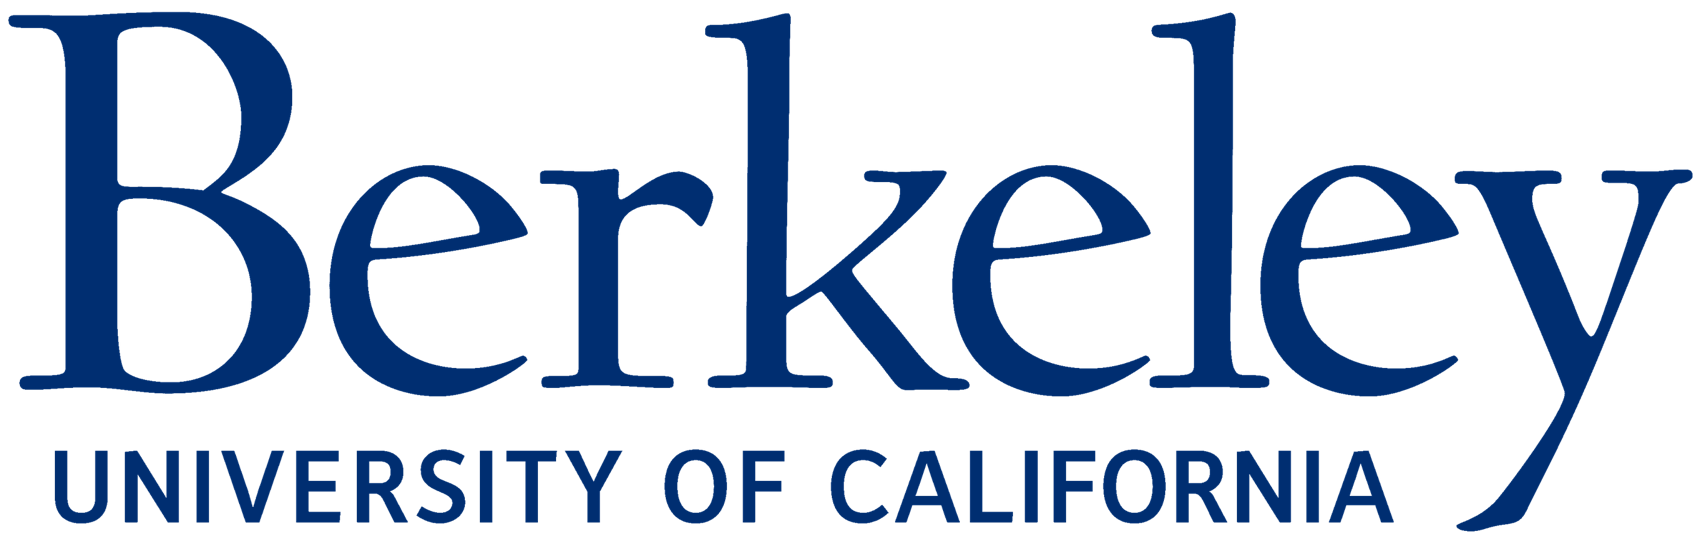 UC Berkeley logotyp